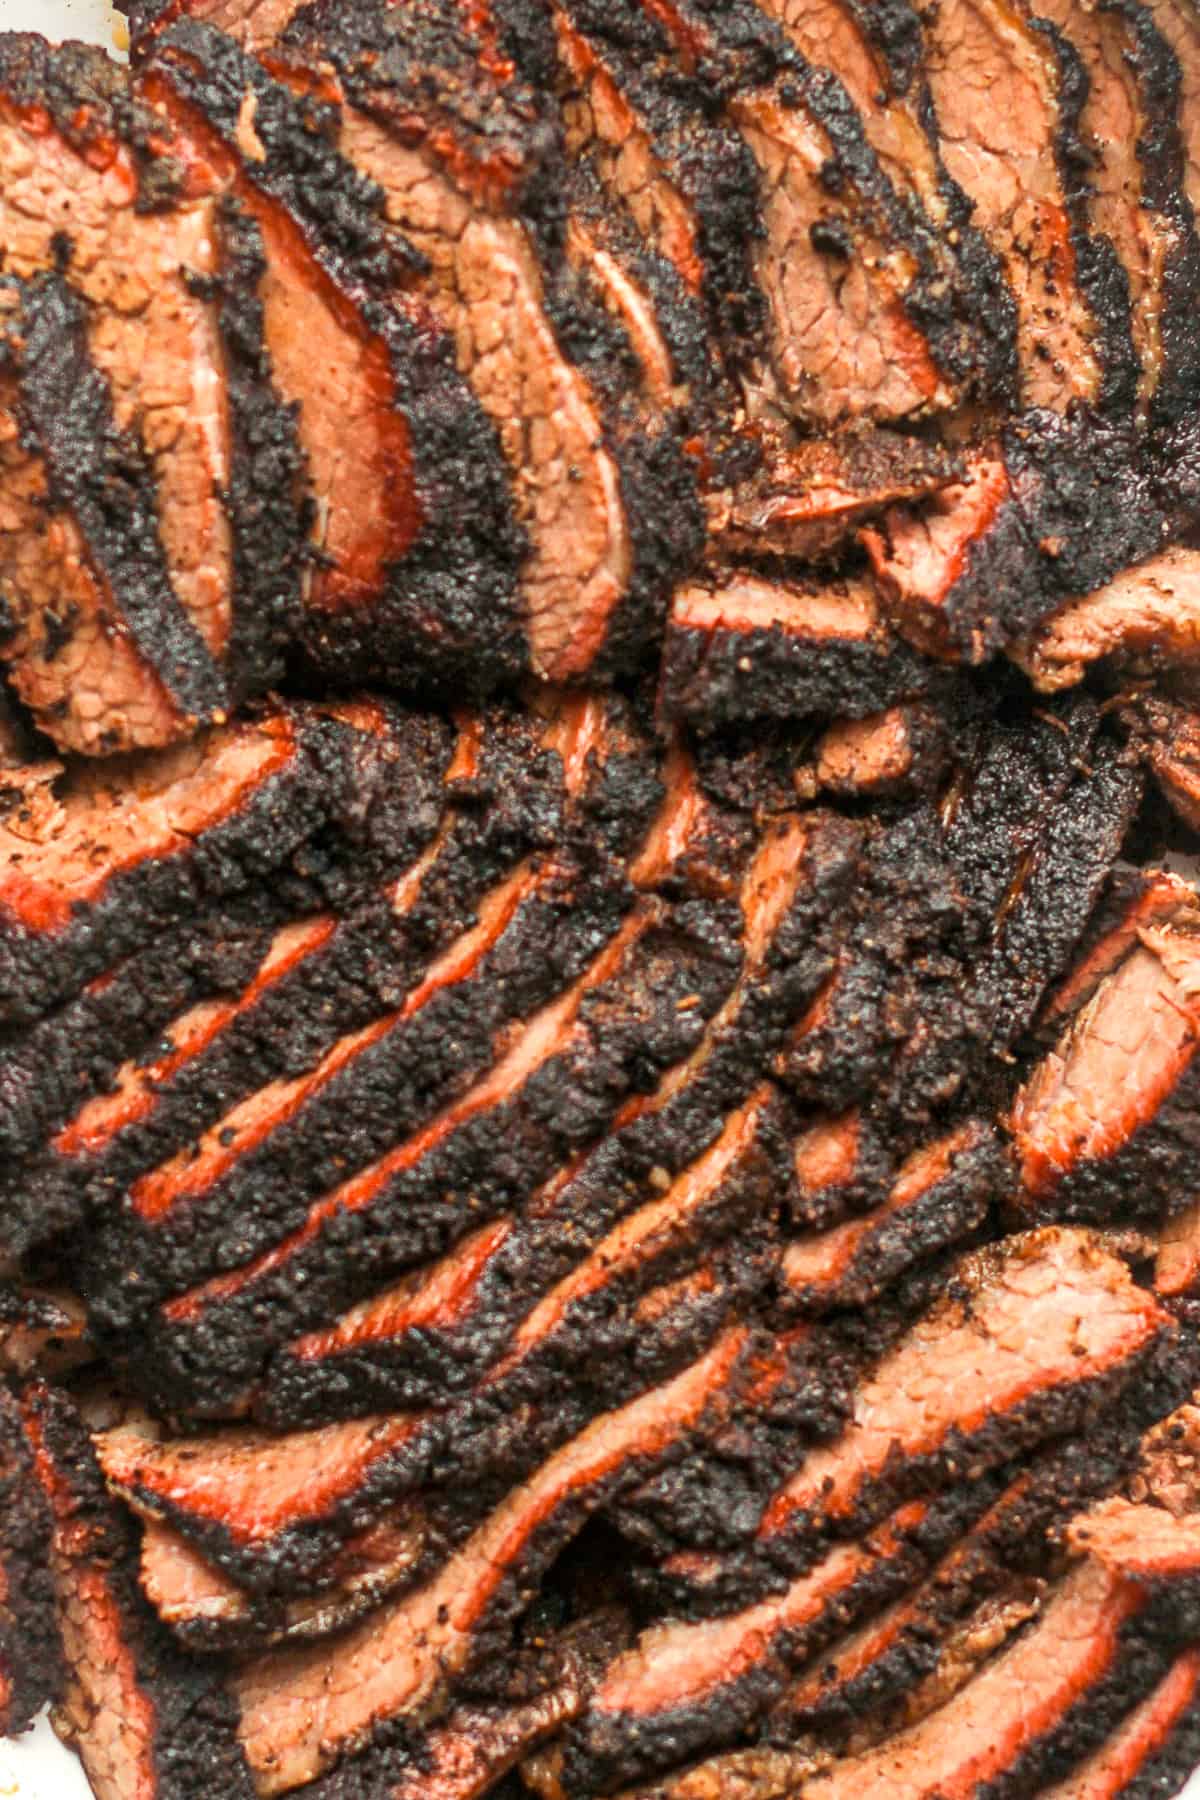 Closeup on slices of smoked brisket.